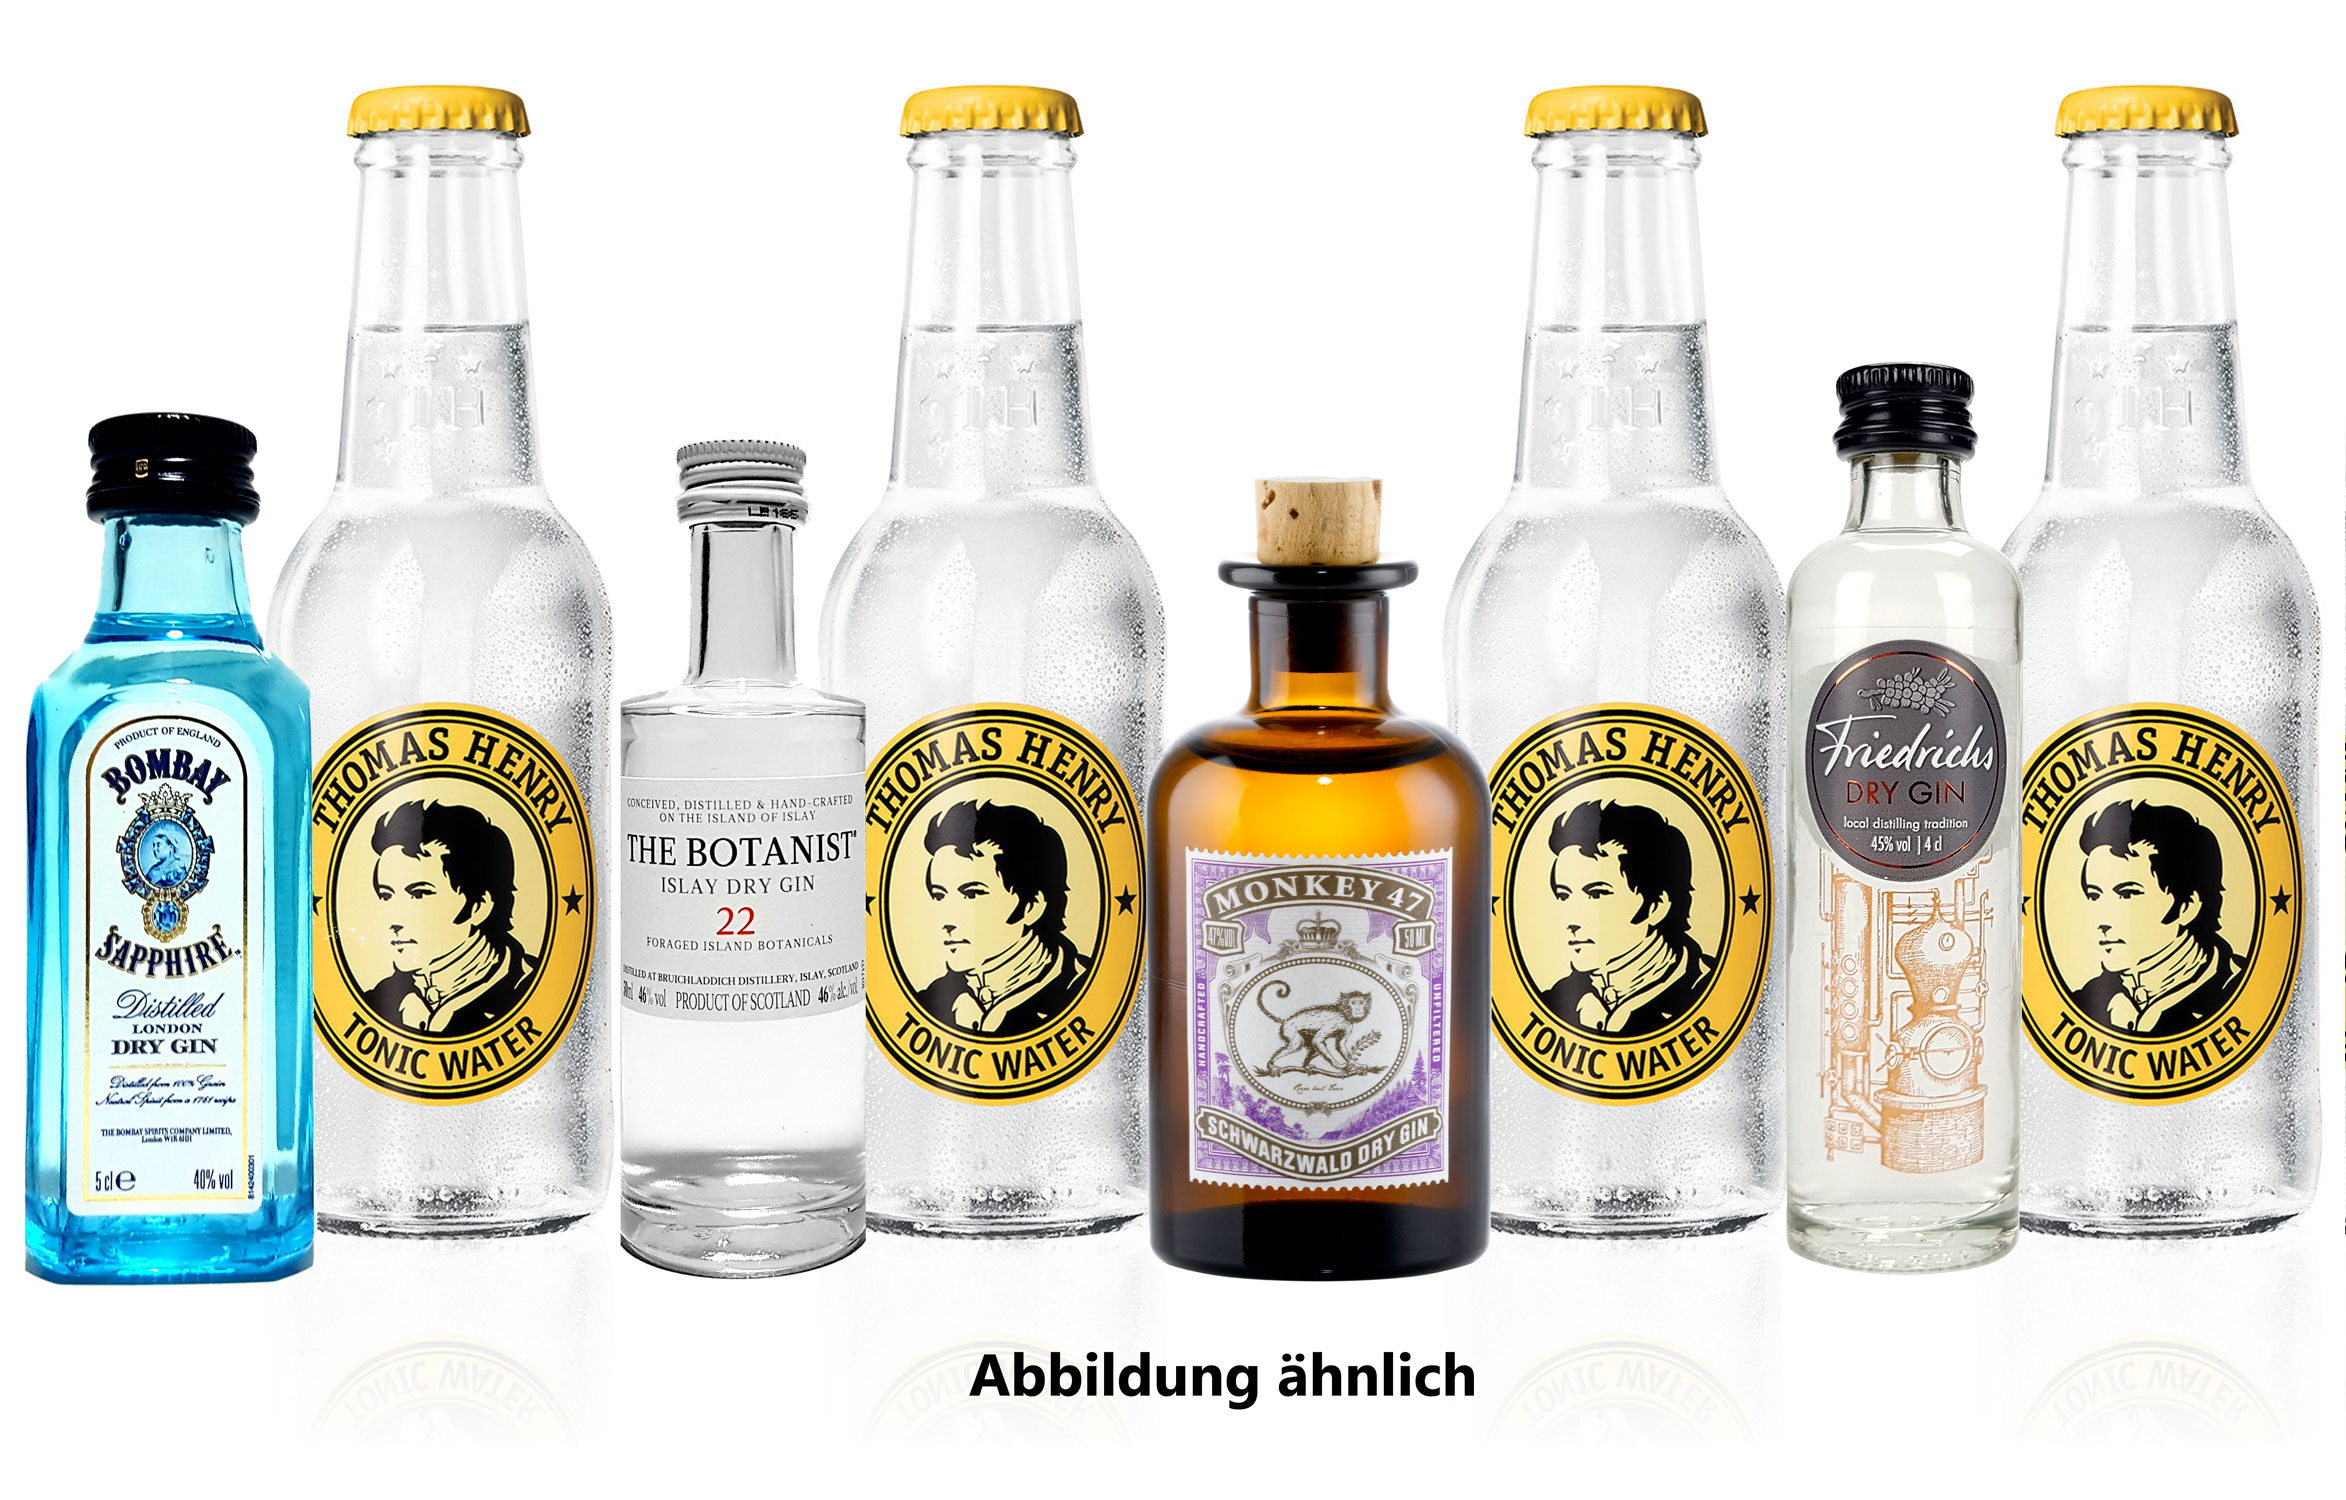 Gin Tonic mini 4er Set - Bombay Sapphire London Dry Gin 50ml (40% Vol) + Monkey 47 Schwarzwald Dry Gin 50ml (47% Vol) + The Botanist Islay Dry Gin 50ml (46% Vol) + Friedrichs Dry Gin 4cl (45% Vol) - Inkl. Pfand MEHRWEG